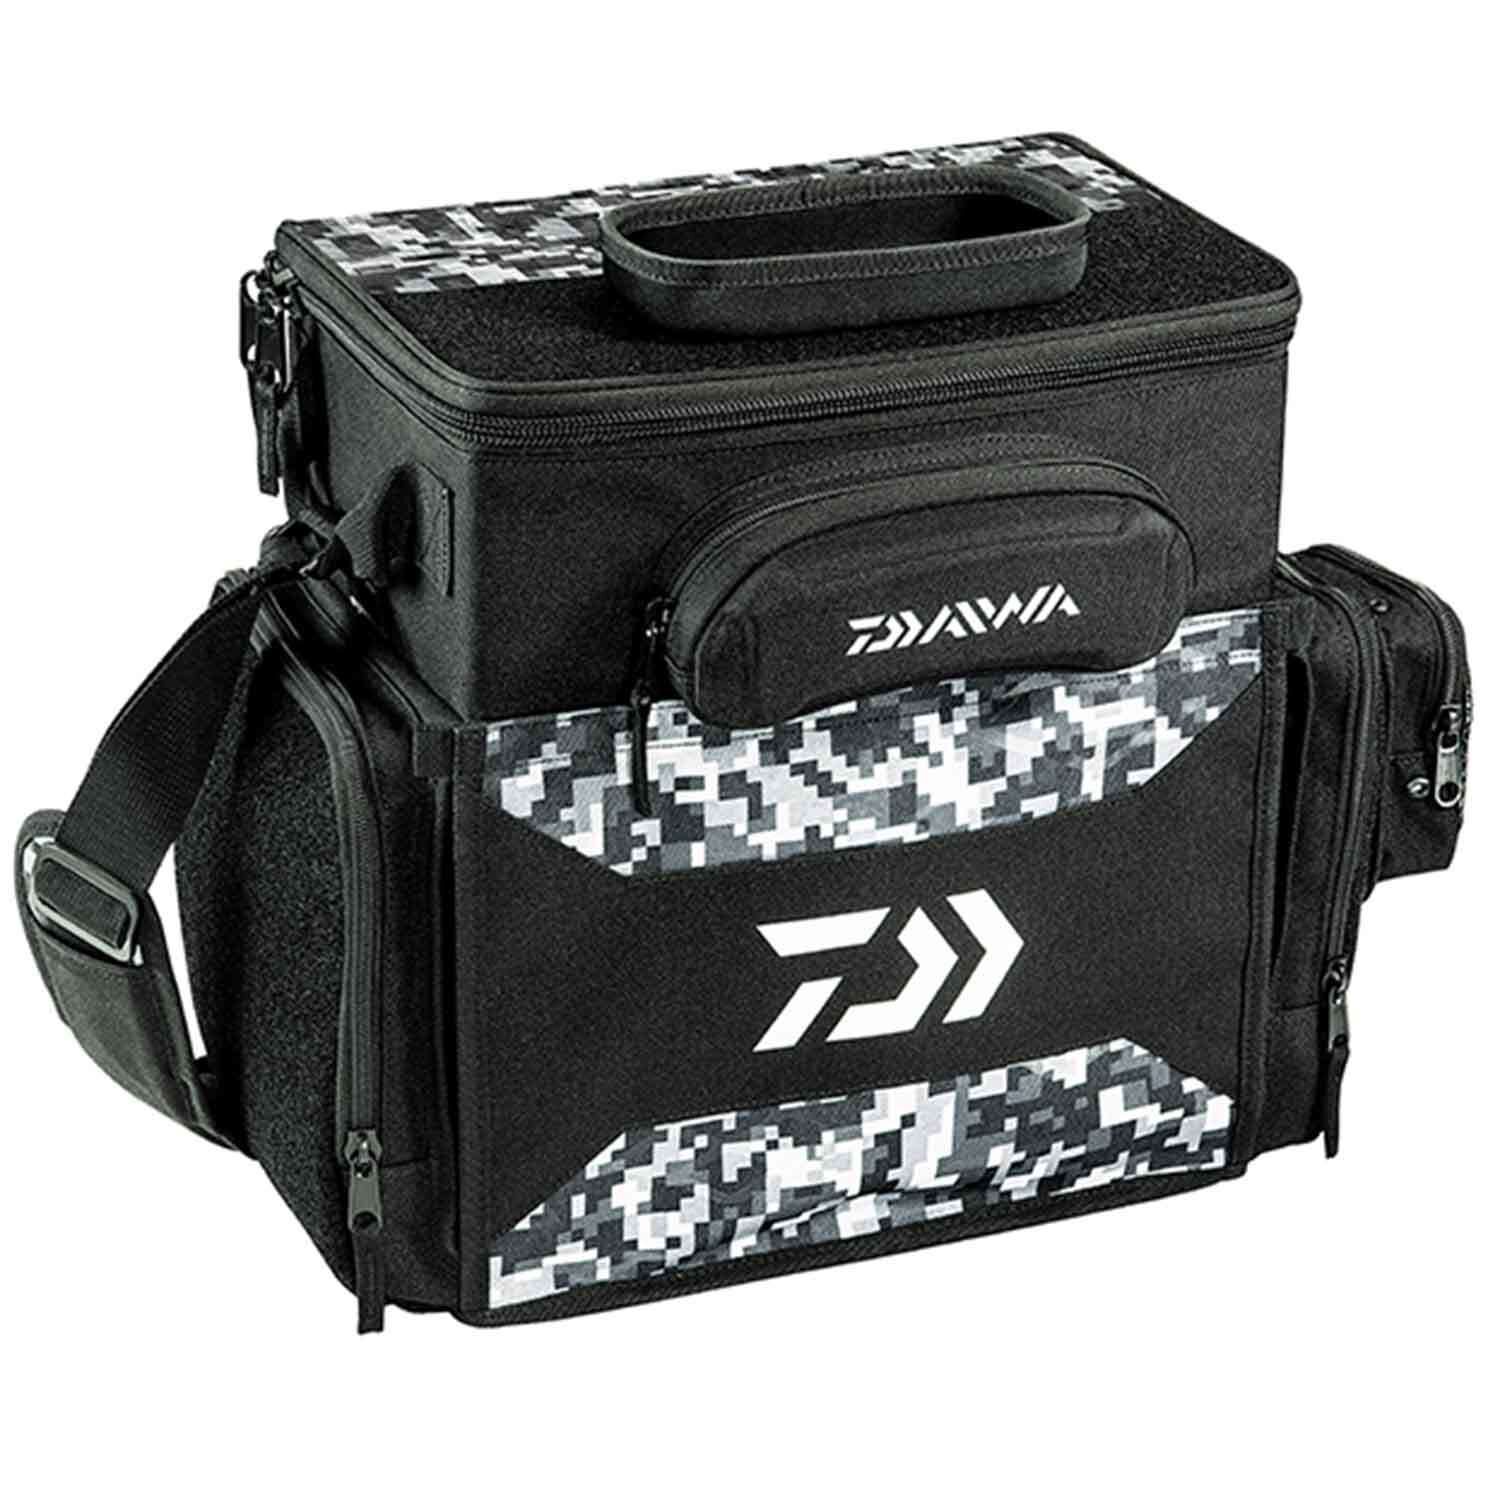 DAIWA LT Tackle Bag D36 (A) White Camo Boxes & Bags buy at Fishingshop.kiwi